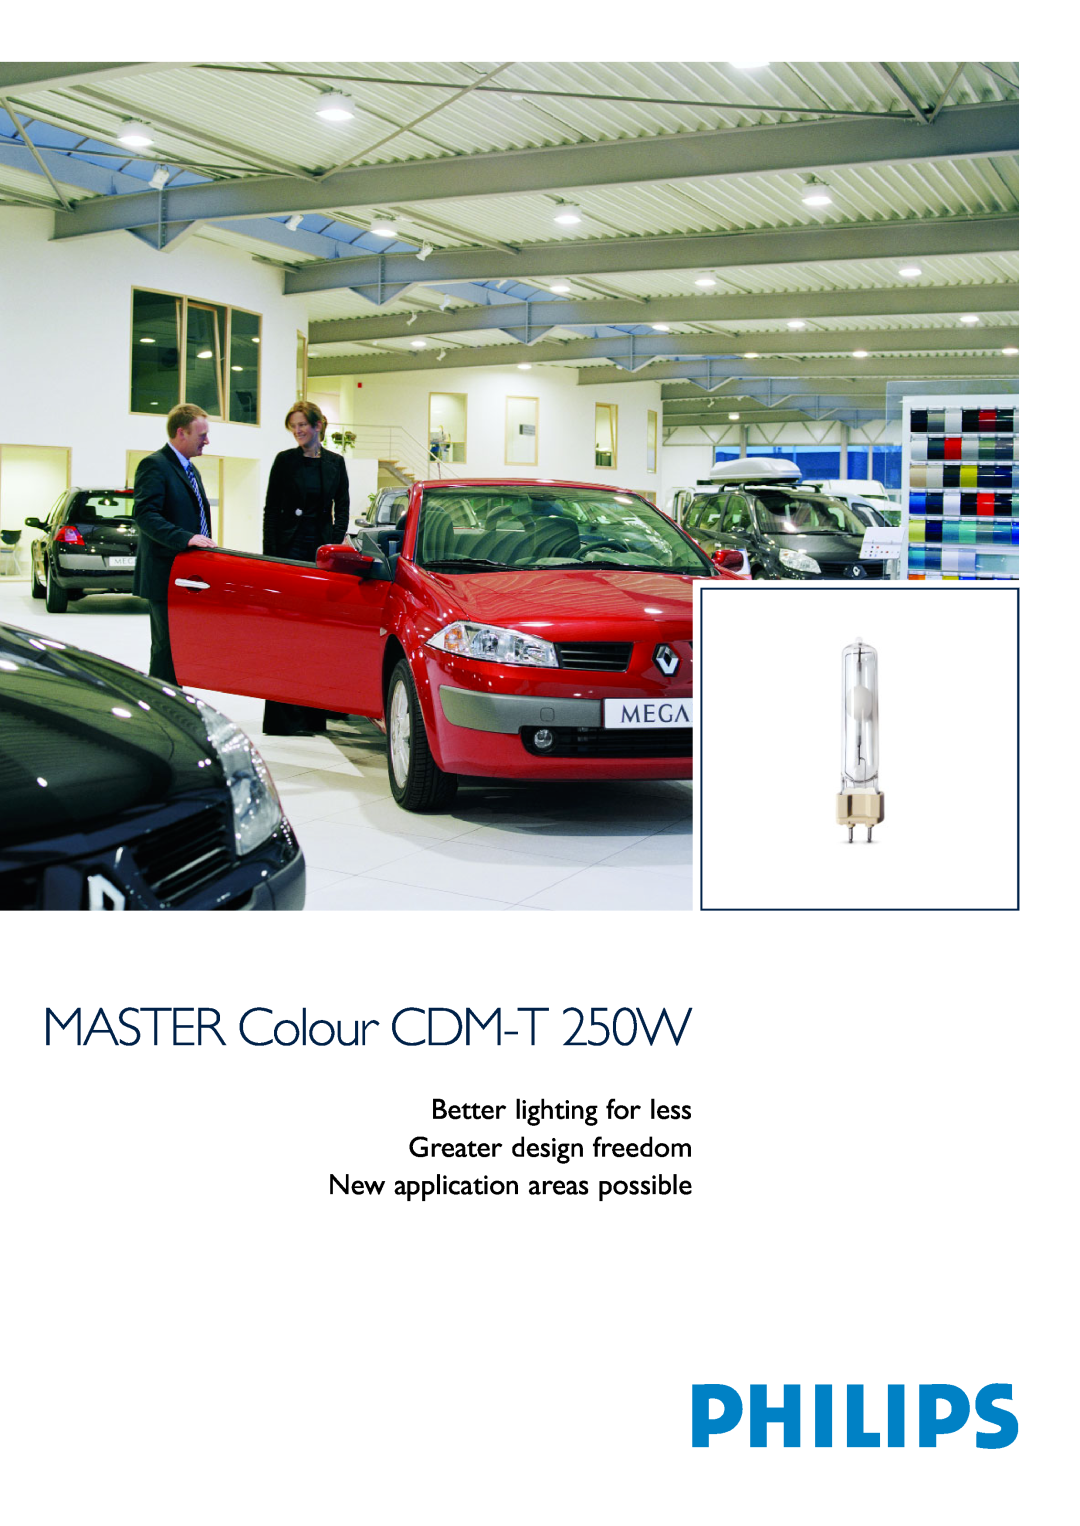 Philips CDM-T 250W manual MASTER Colour CDM-T250W, Better lighting for less Greater design freedom 